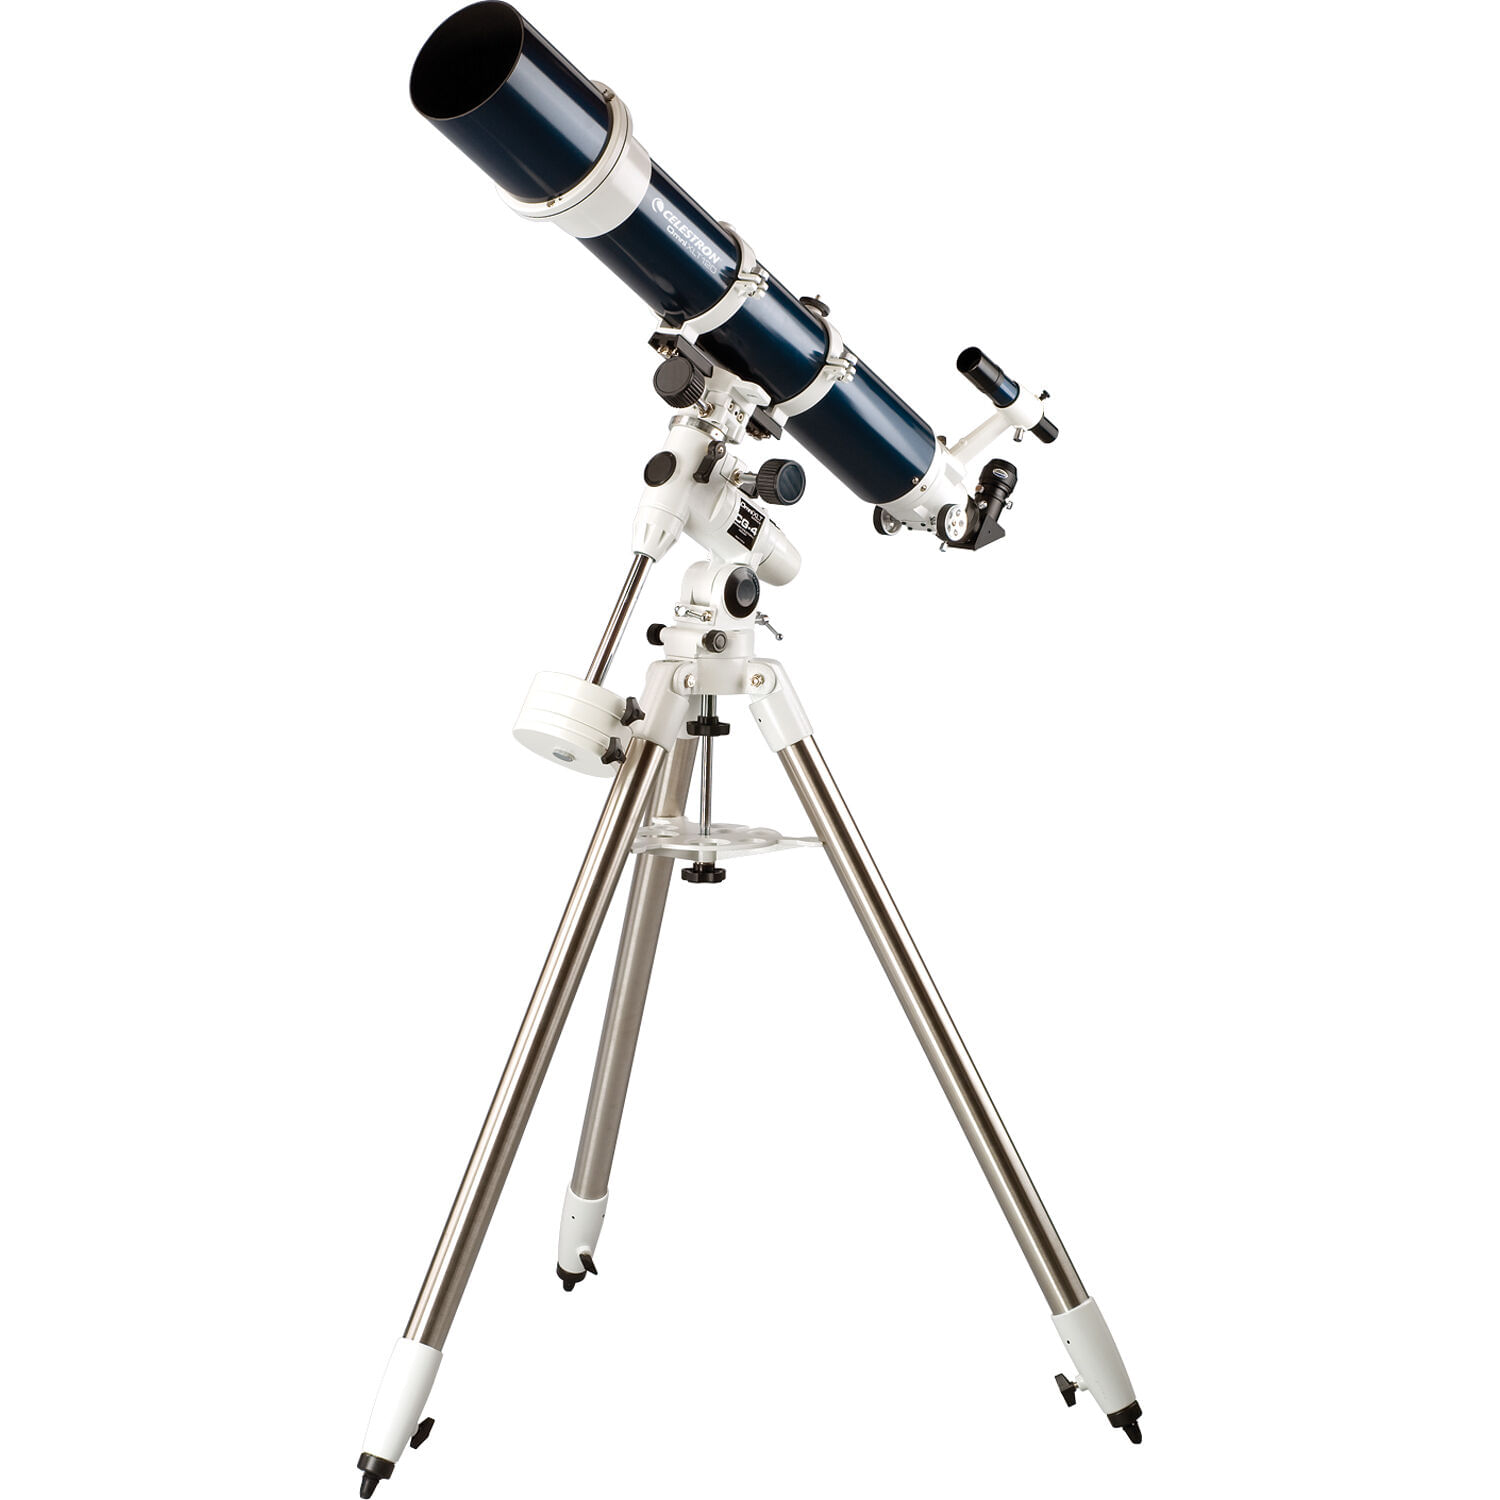 Celestron Omni XLT 120 mm f/8.3 EQ Refractor telescopio